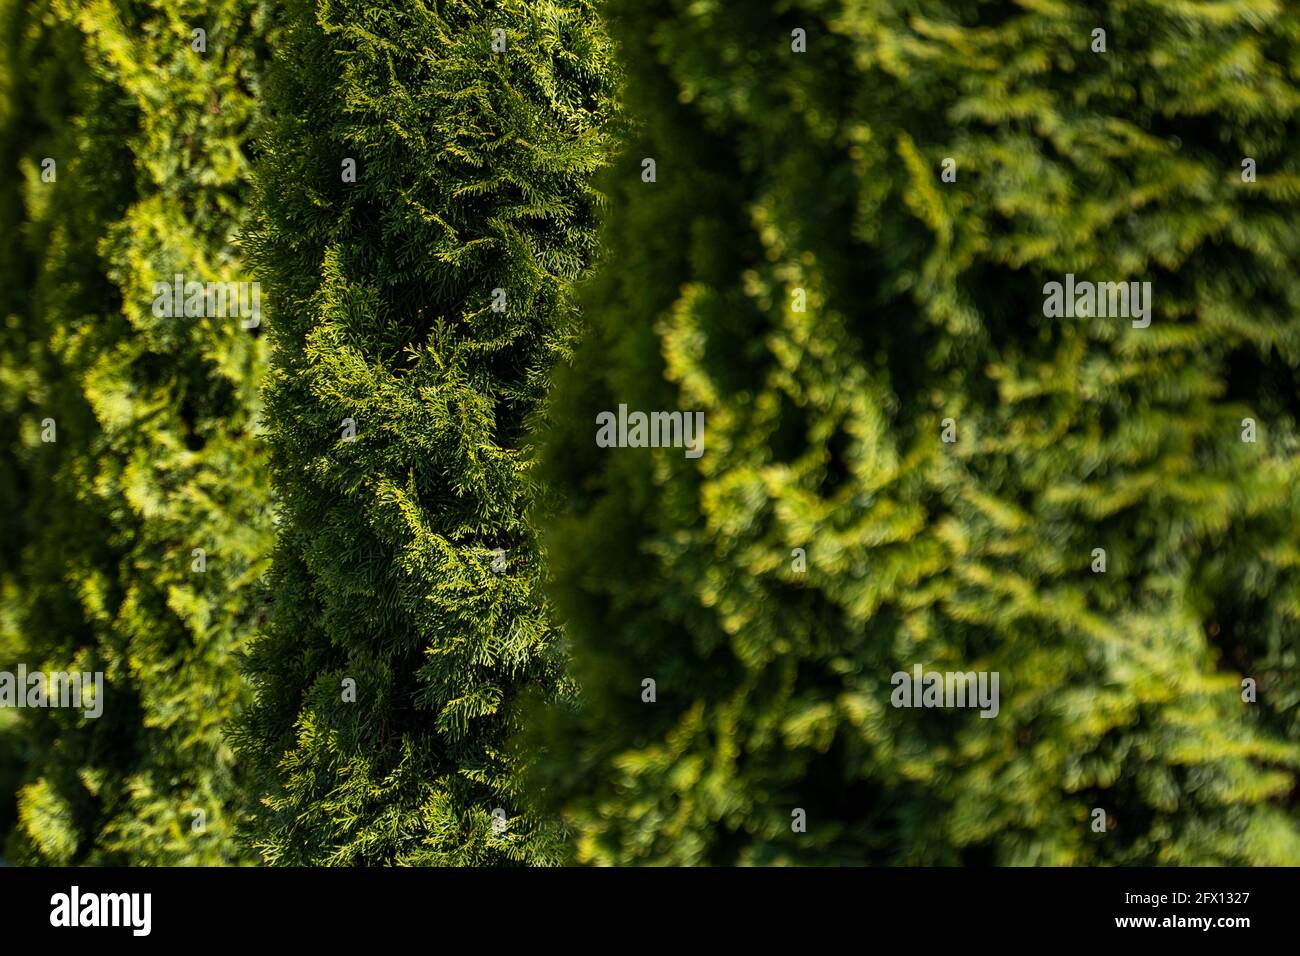 Green hedge of thuja trees. Closeup fresh green branches of thuja trees. Evergreen coniferous Tui tree. Nature, background. Stock Photo